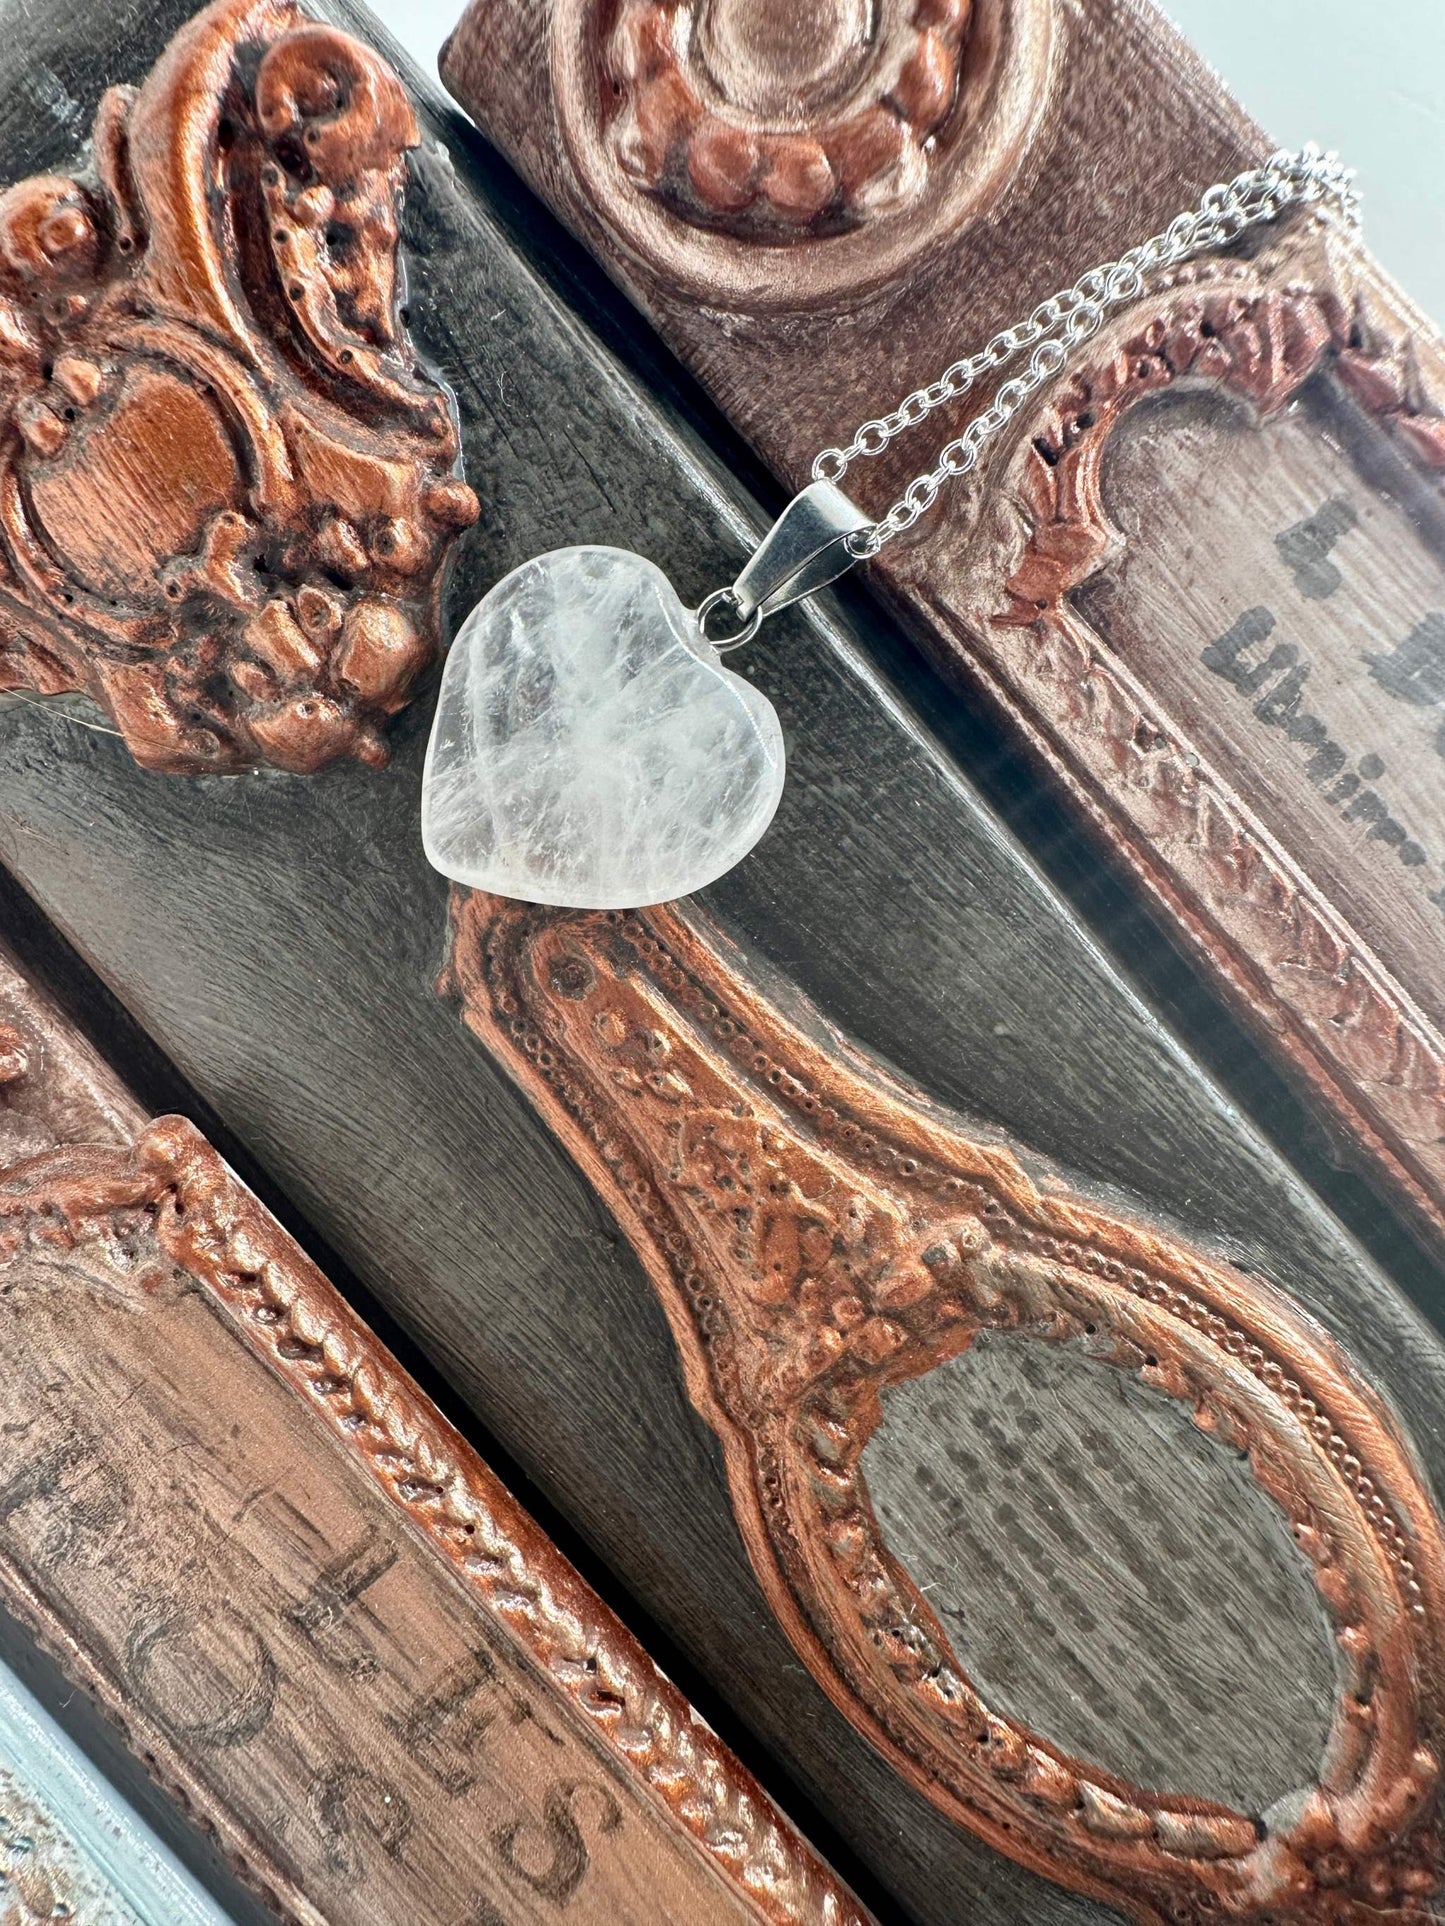 Healing Heart Crystal Pendant Necklace - White Quartz